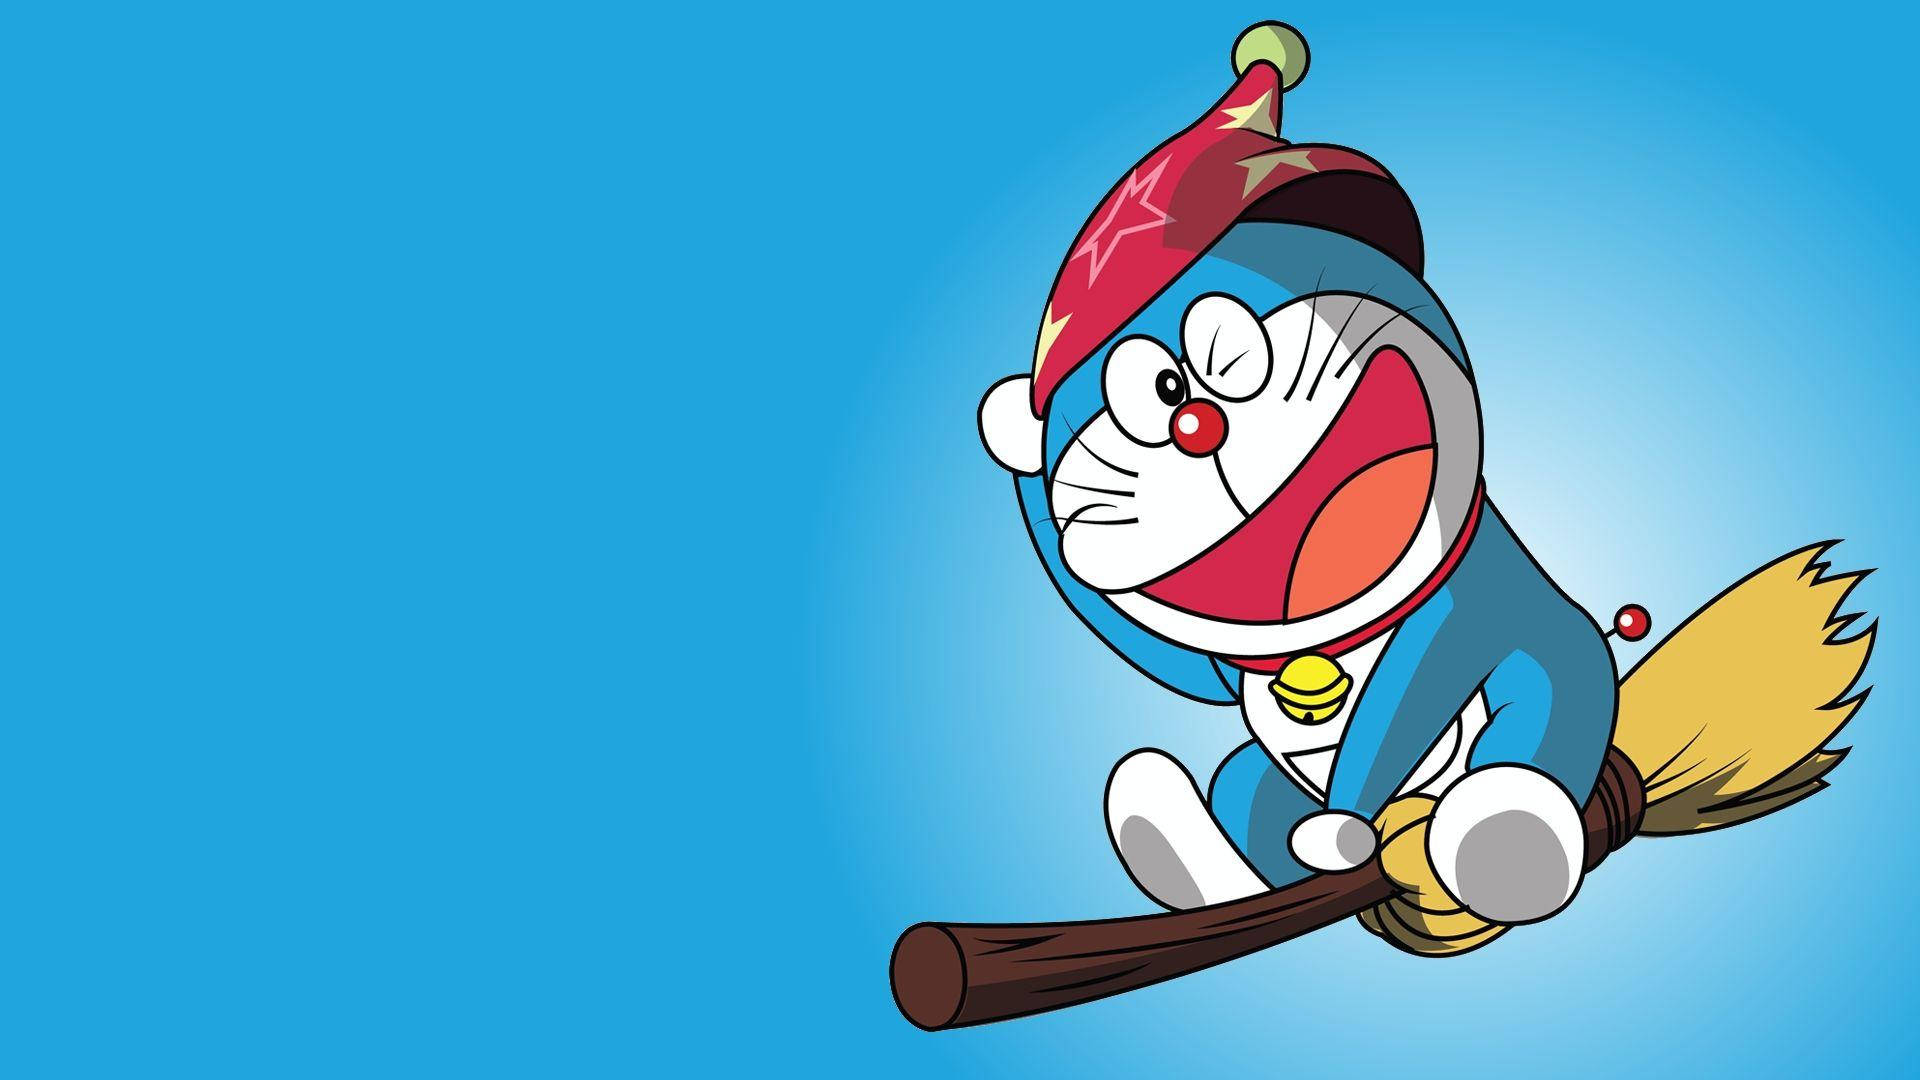 Gambar Doraemon Flying On Broom Background